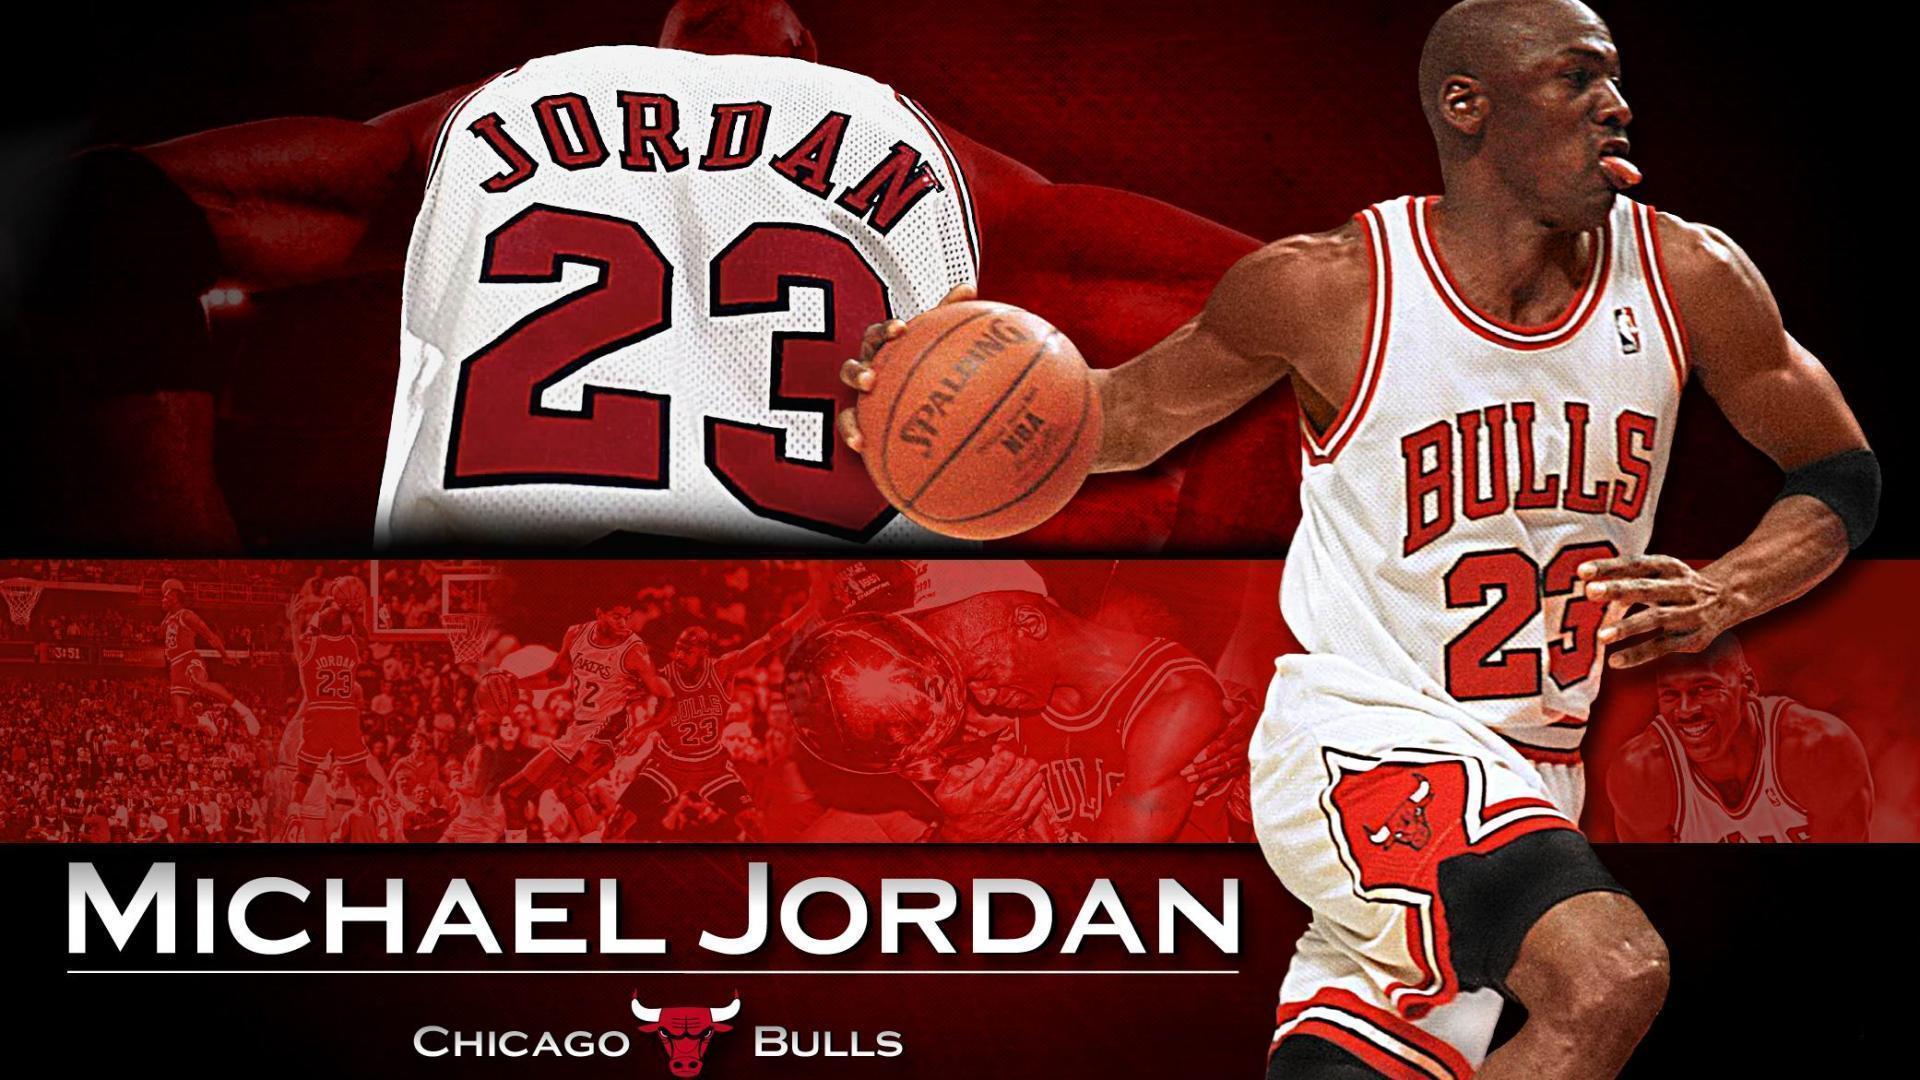 Michael Jordan 23 Chicago Bulls Wallpaper Wide or HD. Male